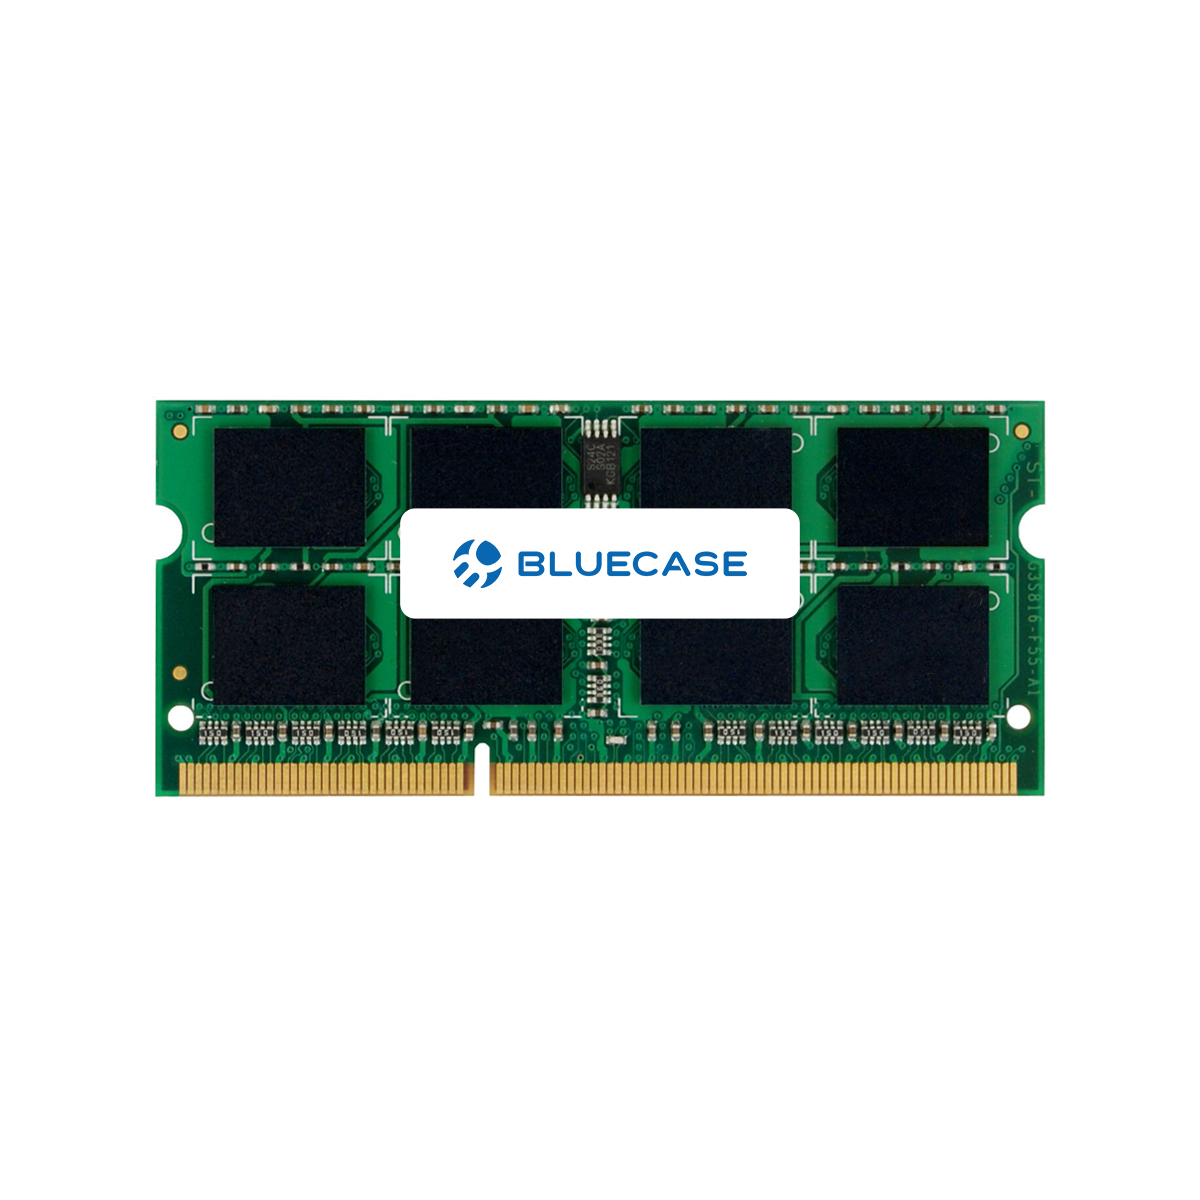 MEMÓRIA RAM DDR3 1333MHz SODIMM LOW VOLTAGE 1.35V BMTSO3D13M135VE9/8G - 1